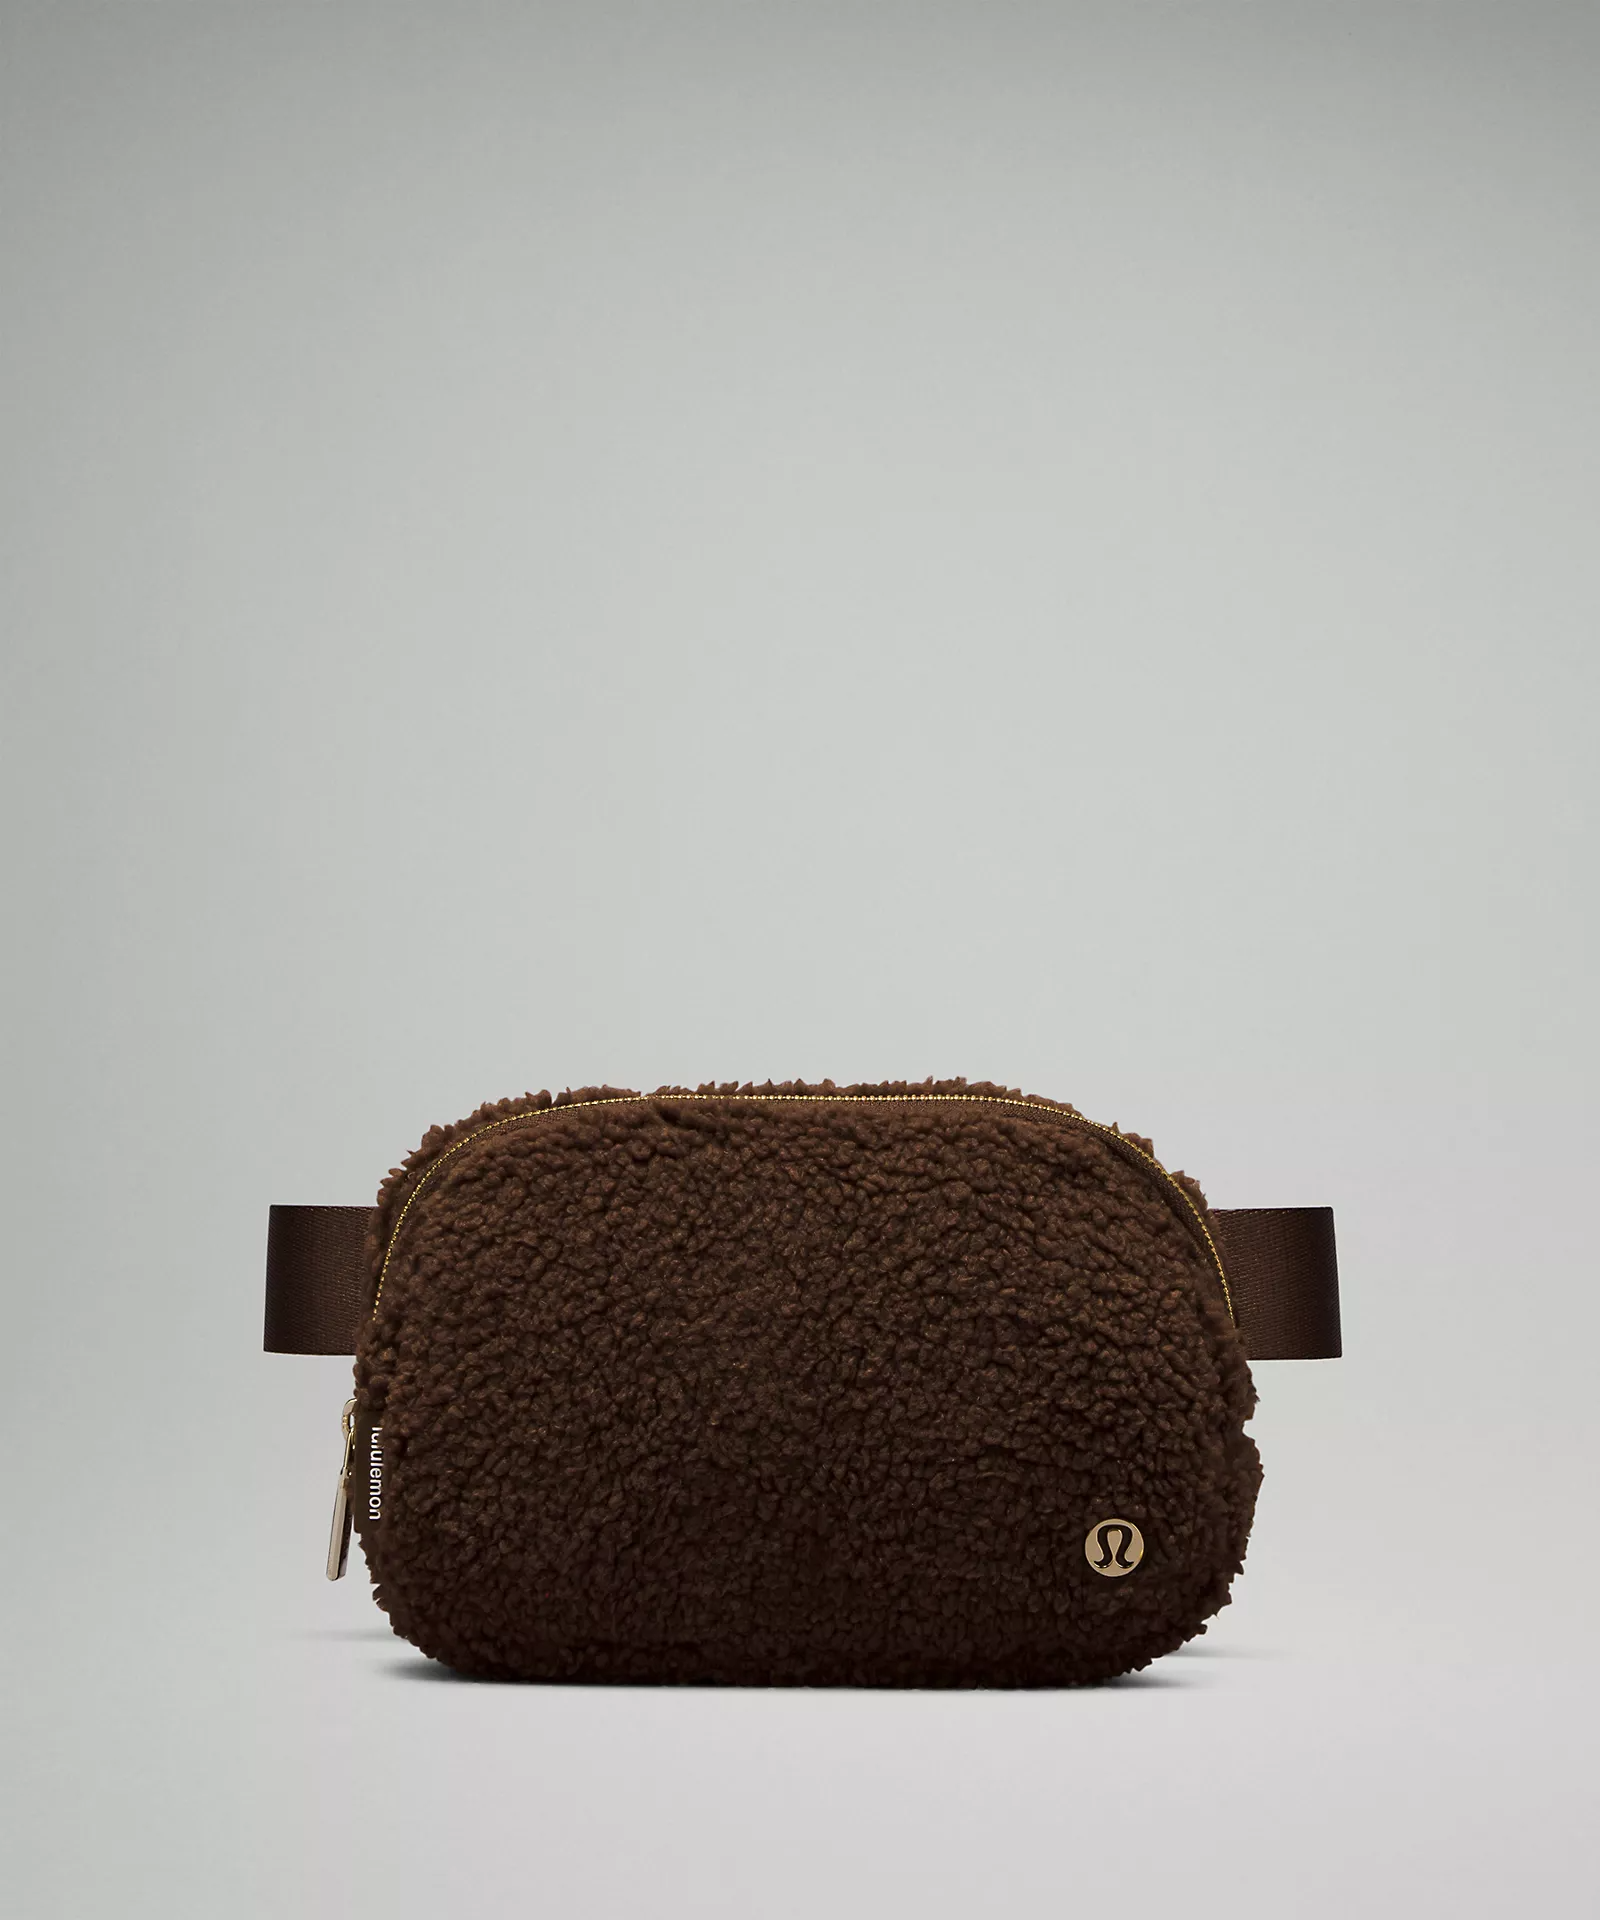 MELI MELO Thela Light Tan Leather Mini Shoulder Handheld Bag